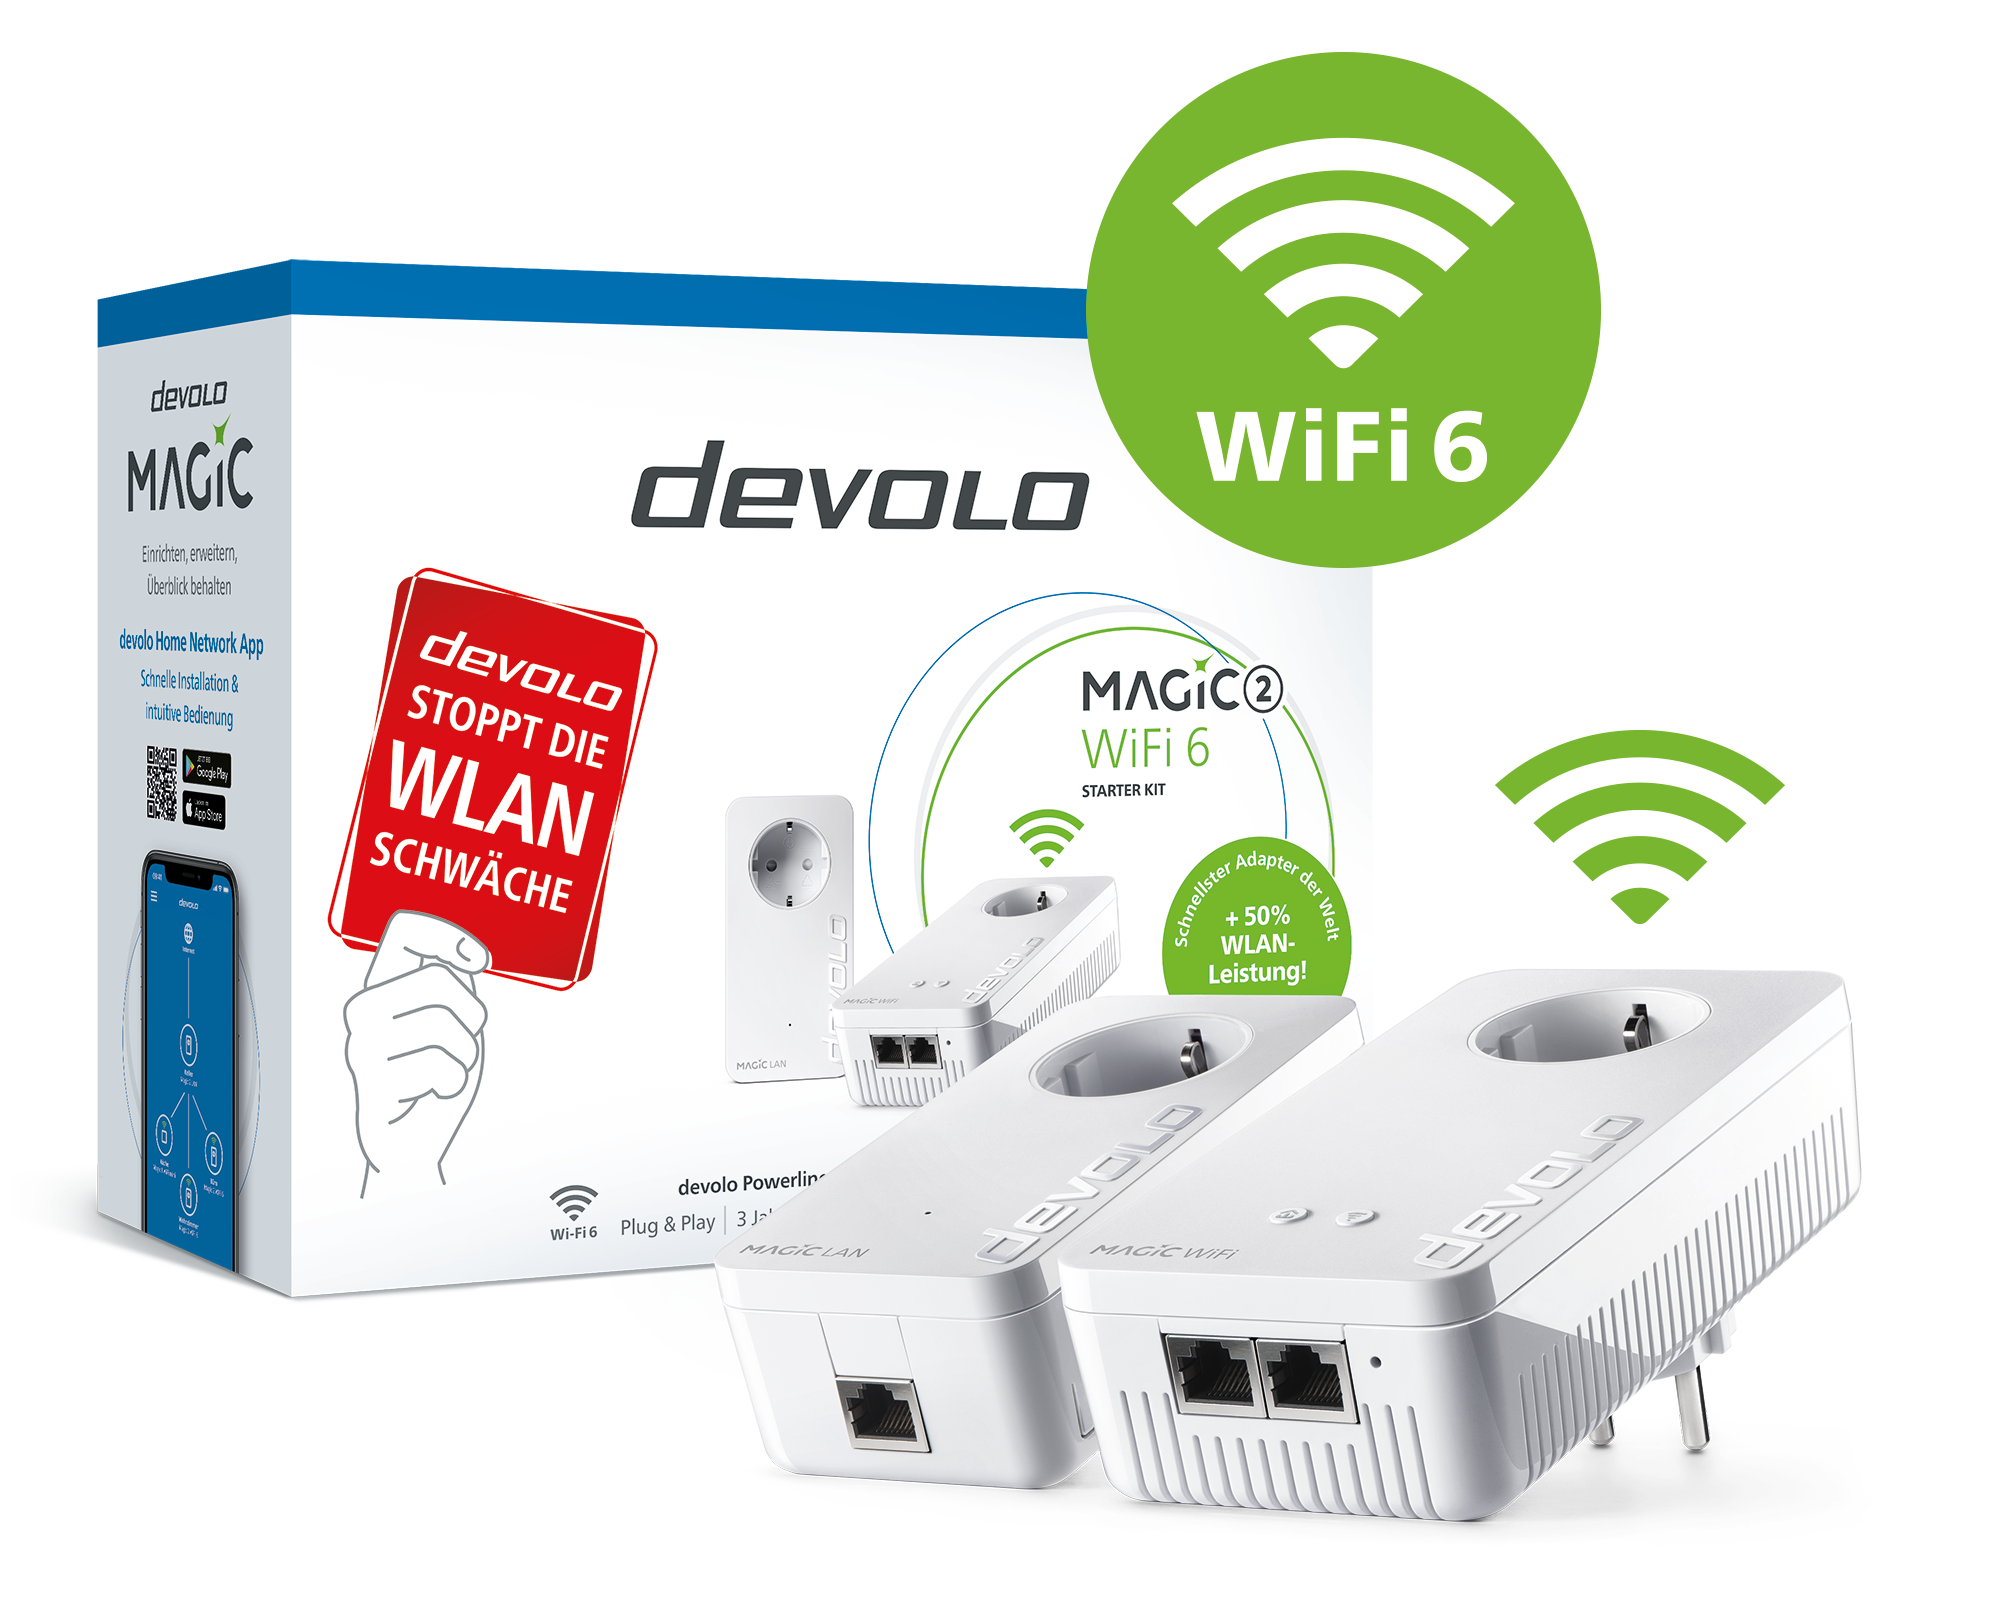 Devolo Magic 2 WiFi 6 Multiroom Kit